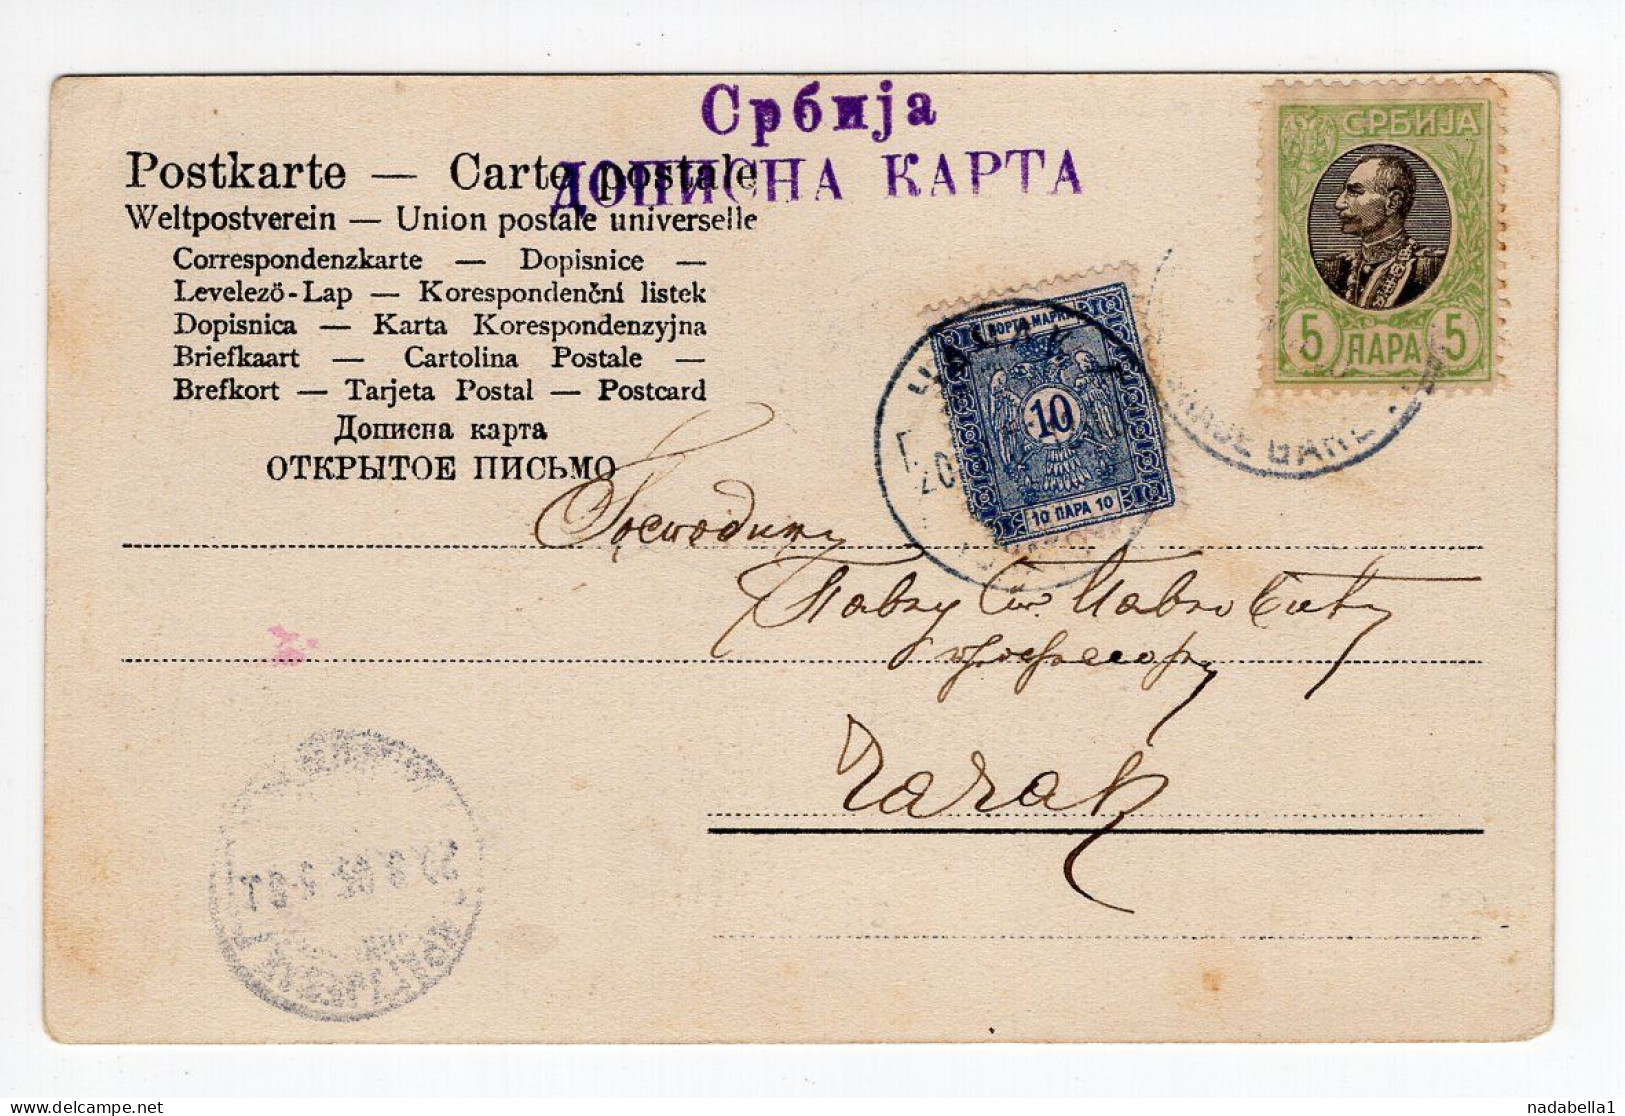 1905. SERBIA,BELGRADE,BELGRADE GARE TO CACAK,10 PARA POSTAGE DUE IN CACAK,POSTCARD,USED - Serbie